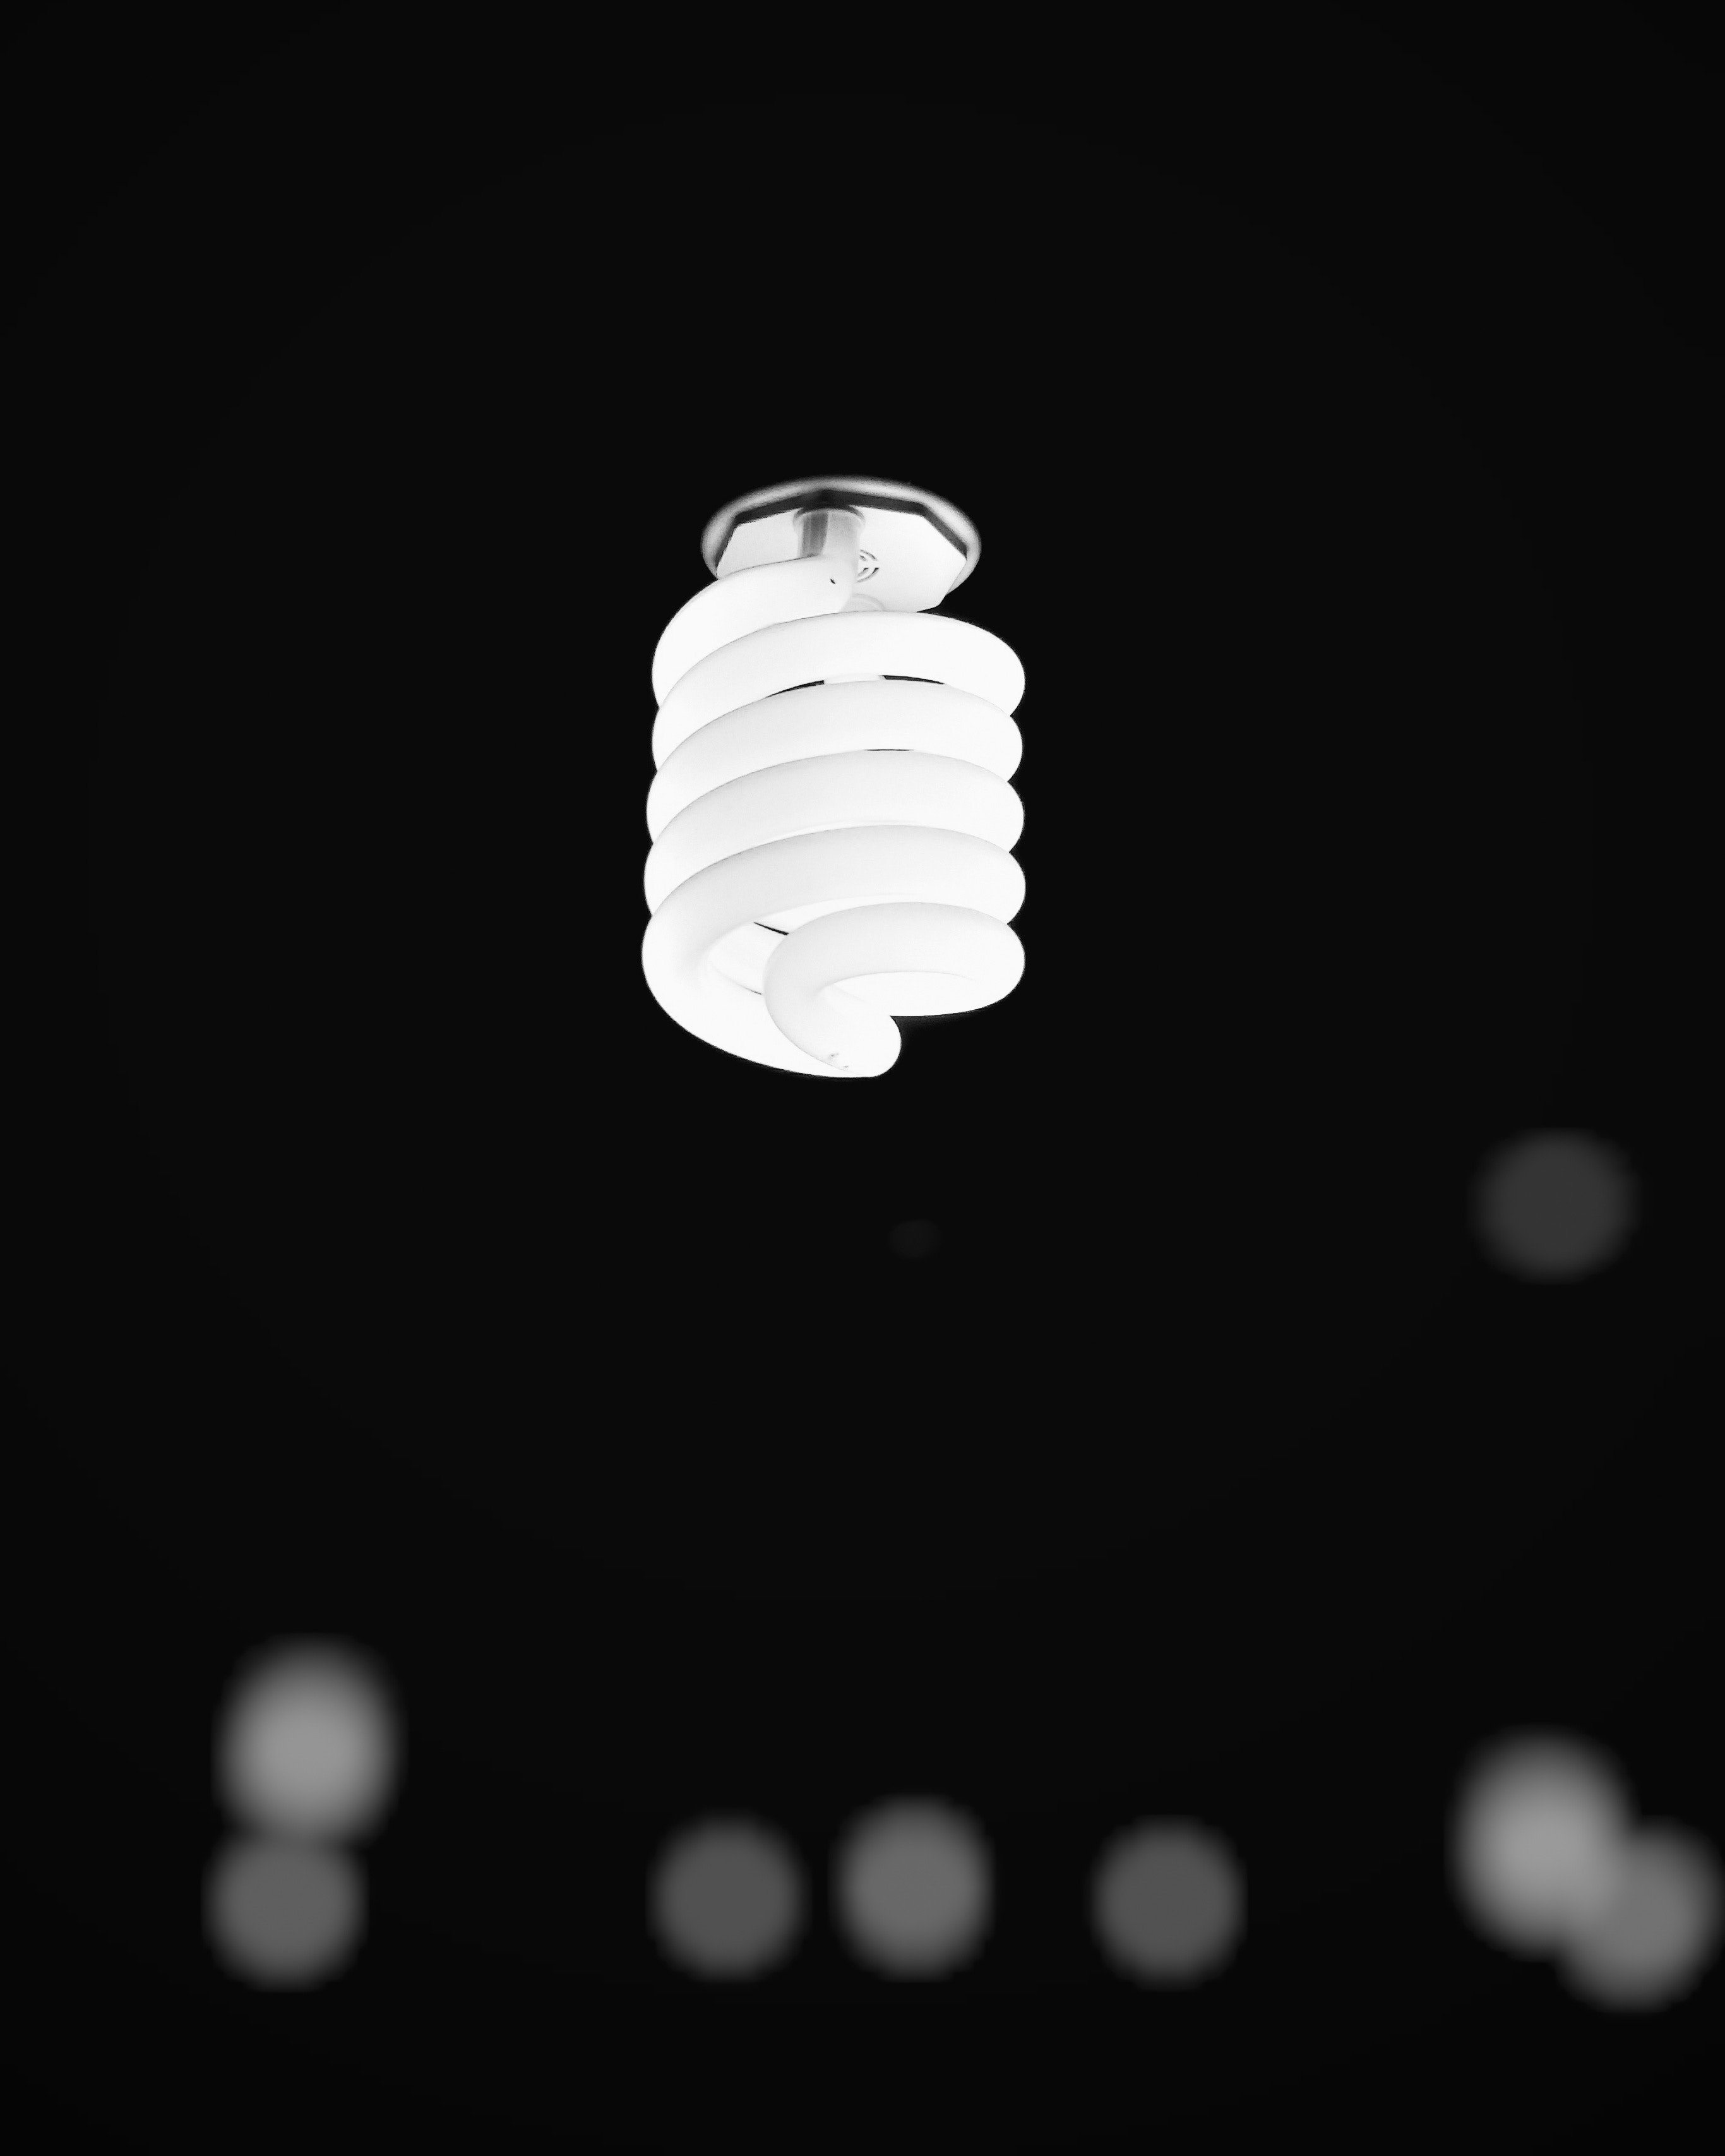 Free HD light bulb, electricity, black, illumination, bw, chb, spiral, lighting